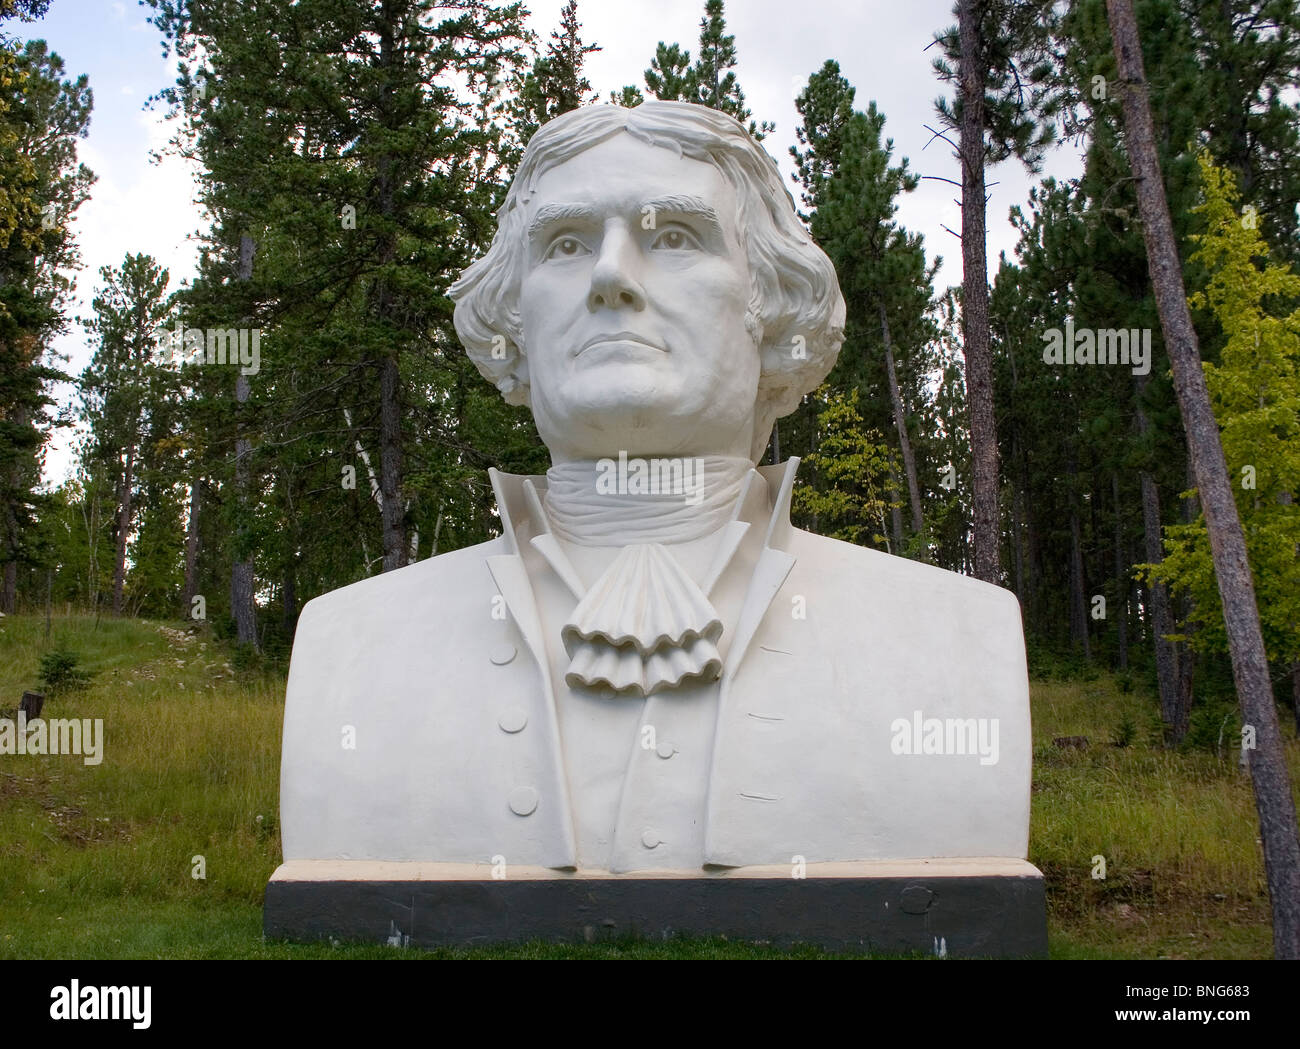 Thomas Jefferson bust by sculptor David Adickes at Presidents Park in Lead South Dakota Stock Photo